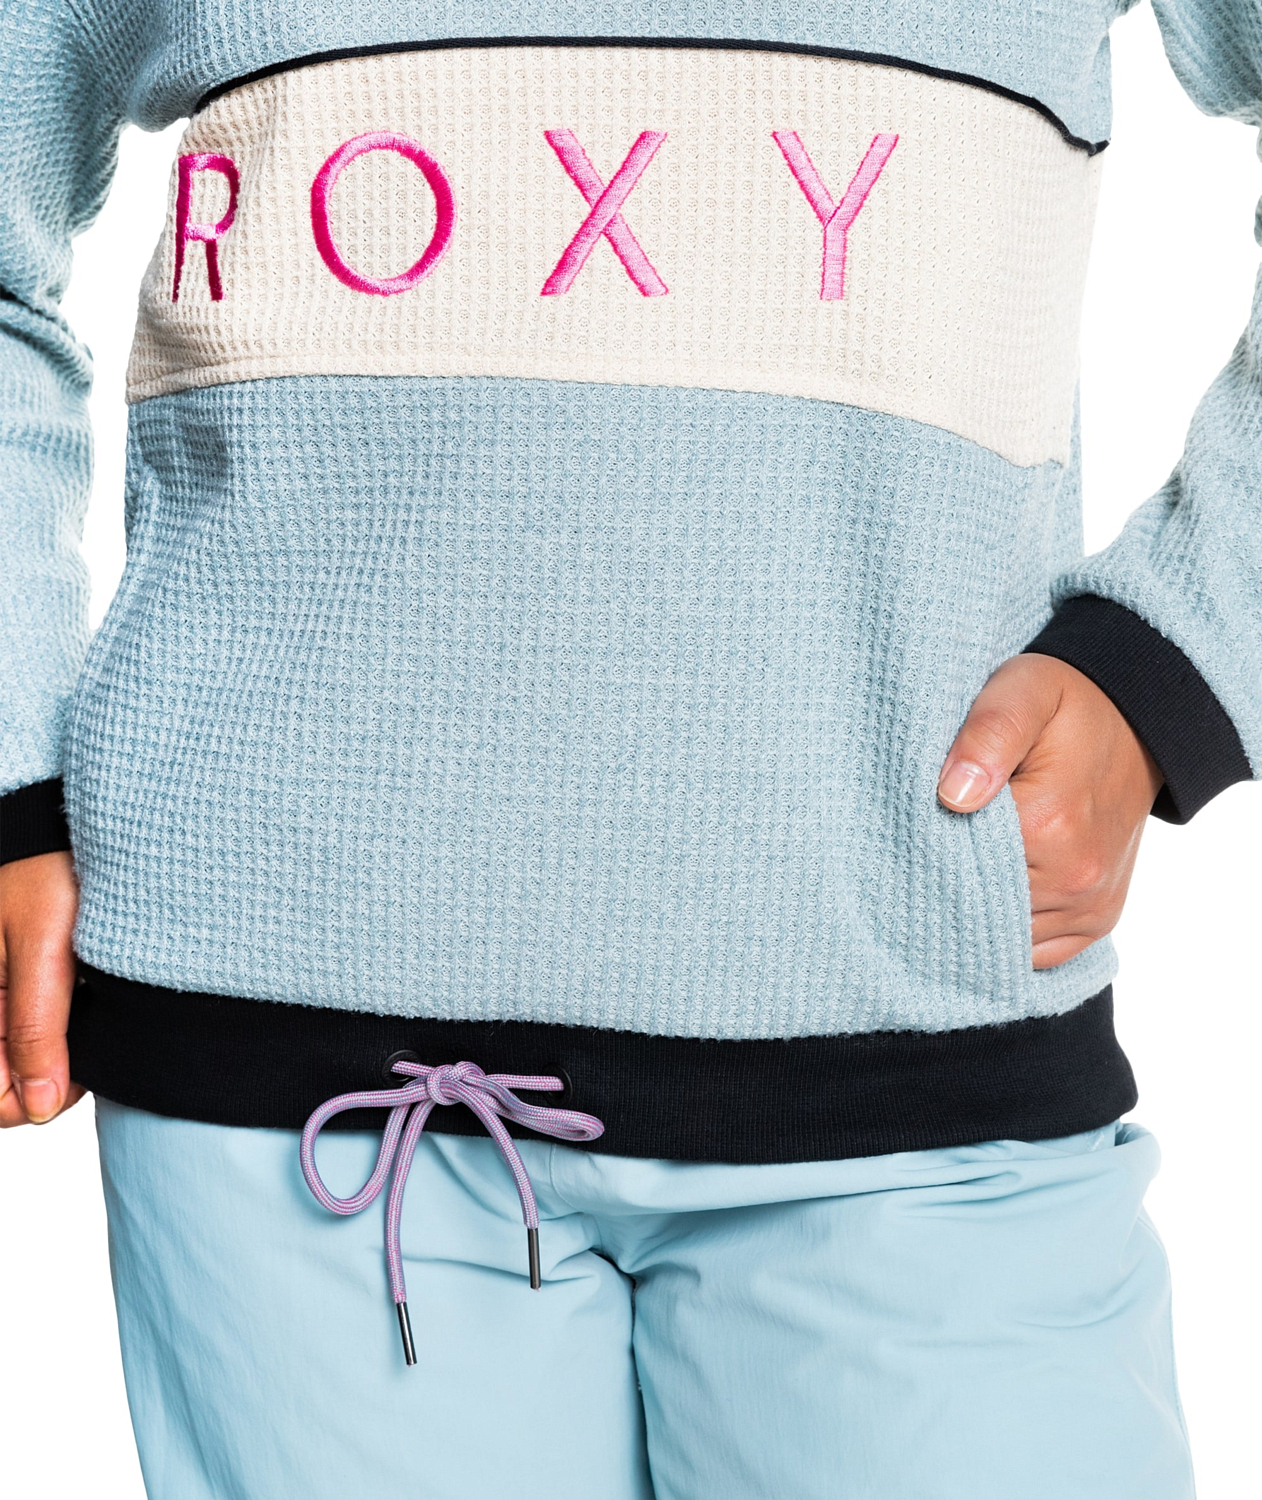 Флис сноубордический Roxy Stillness - WarmFlight® Fleece Stone Blue